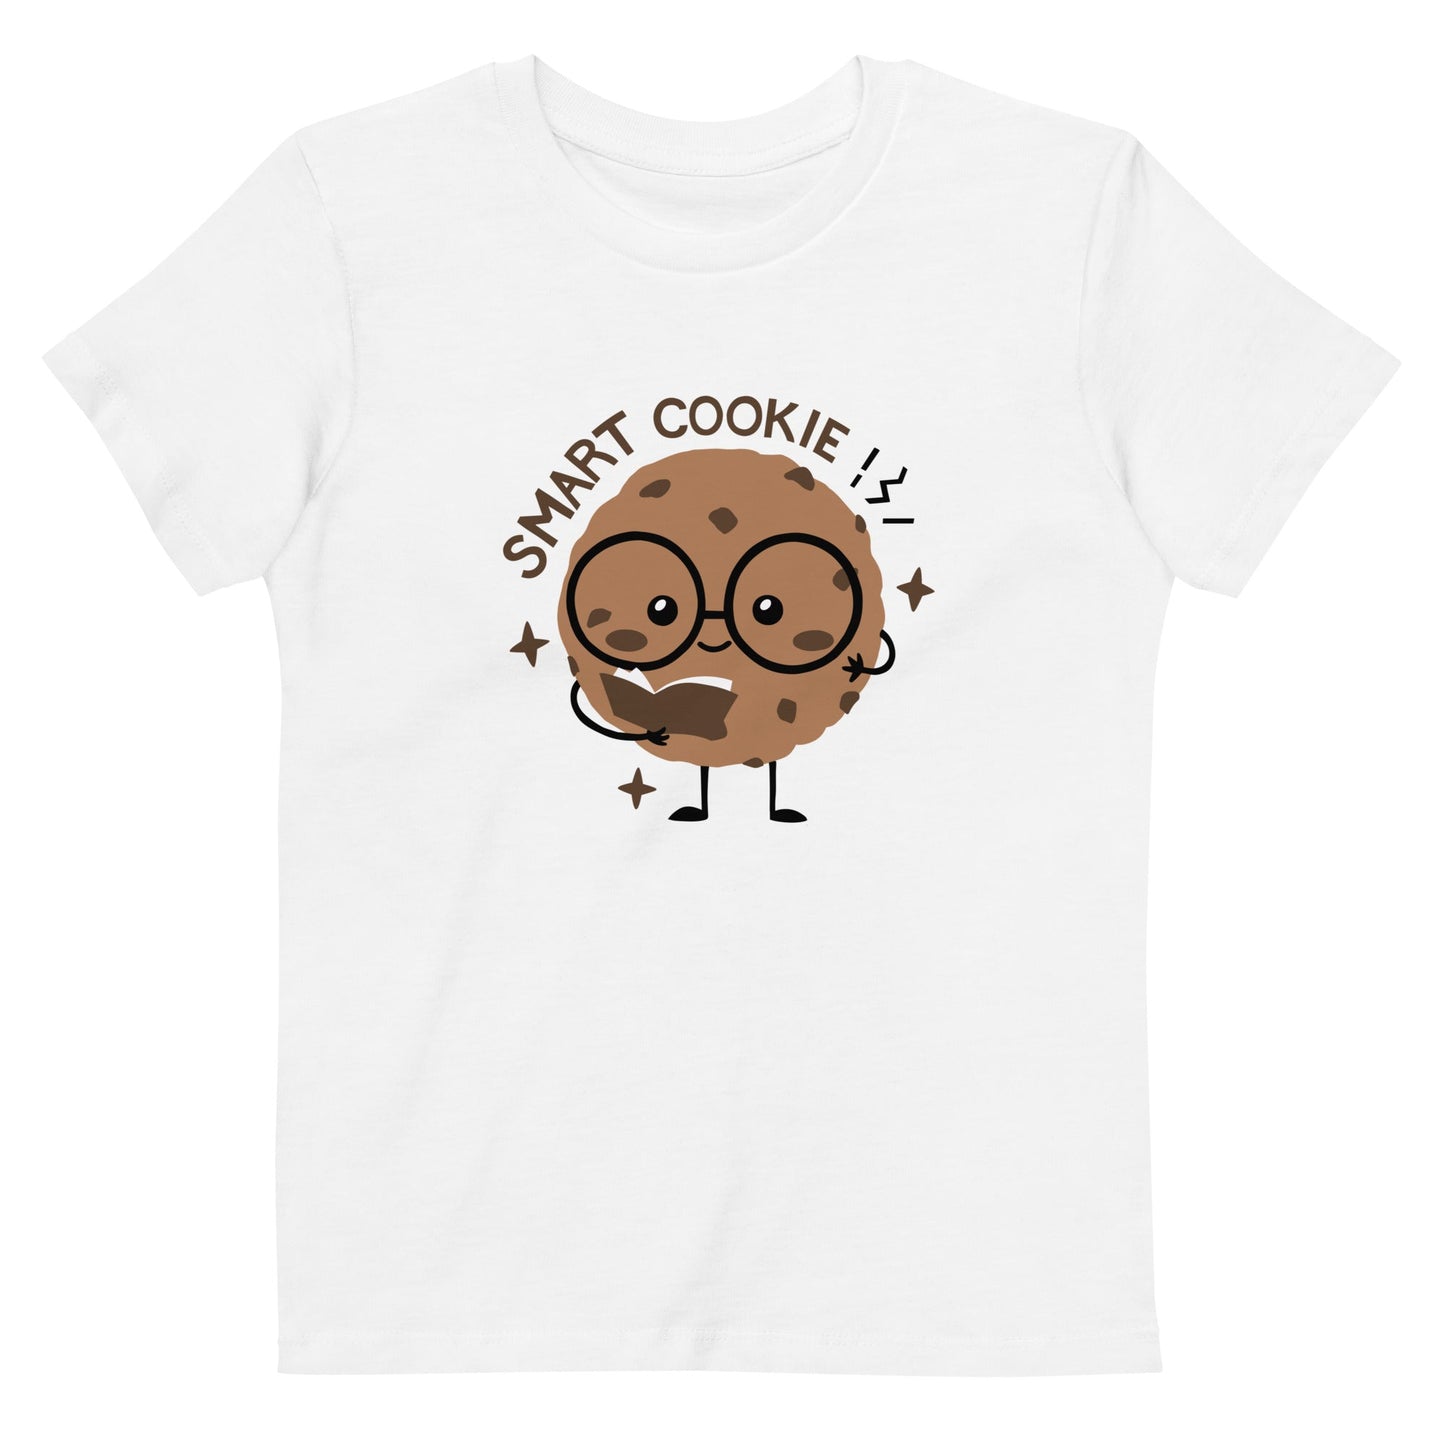 Smart Cookie Organic cotton kids t-shirt